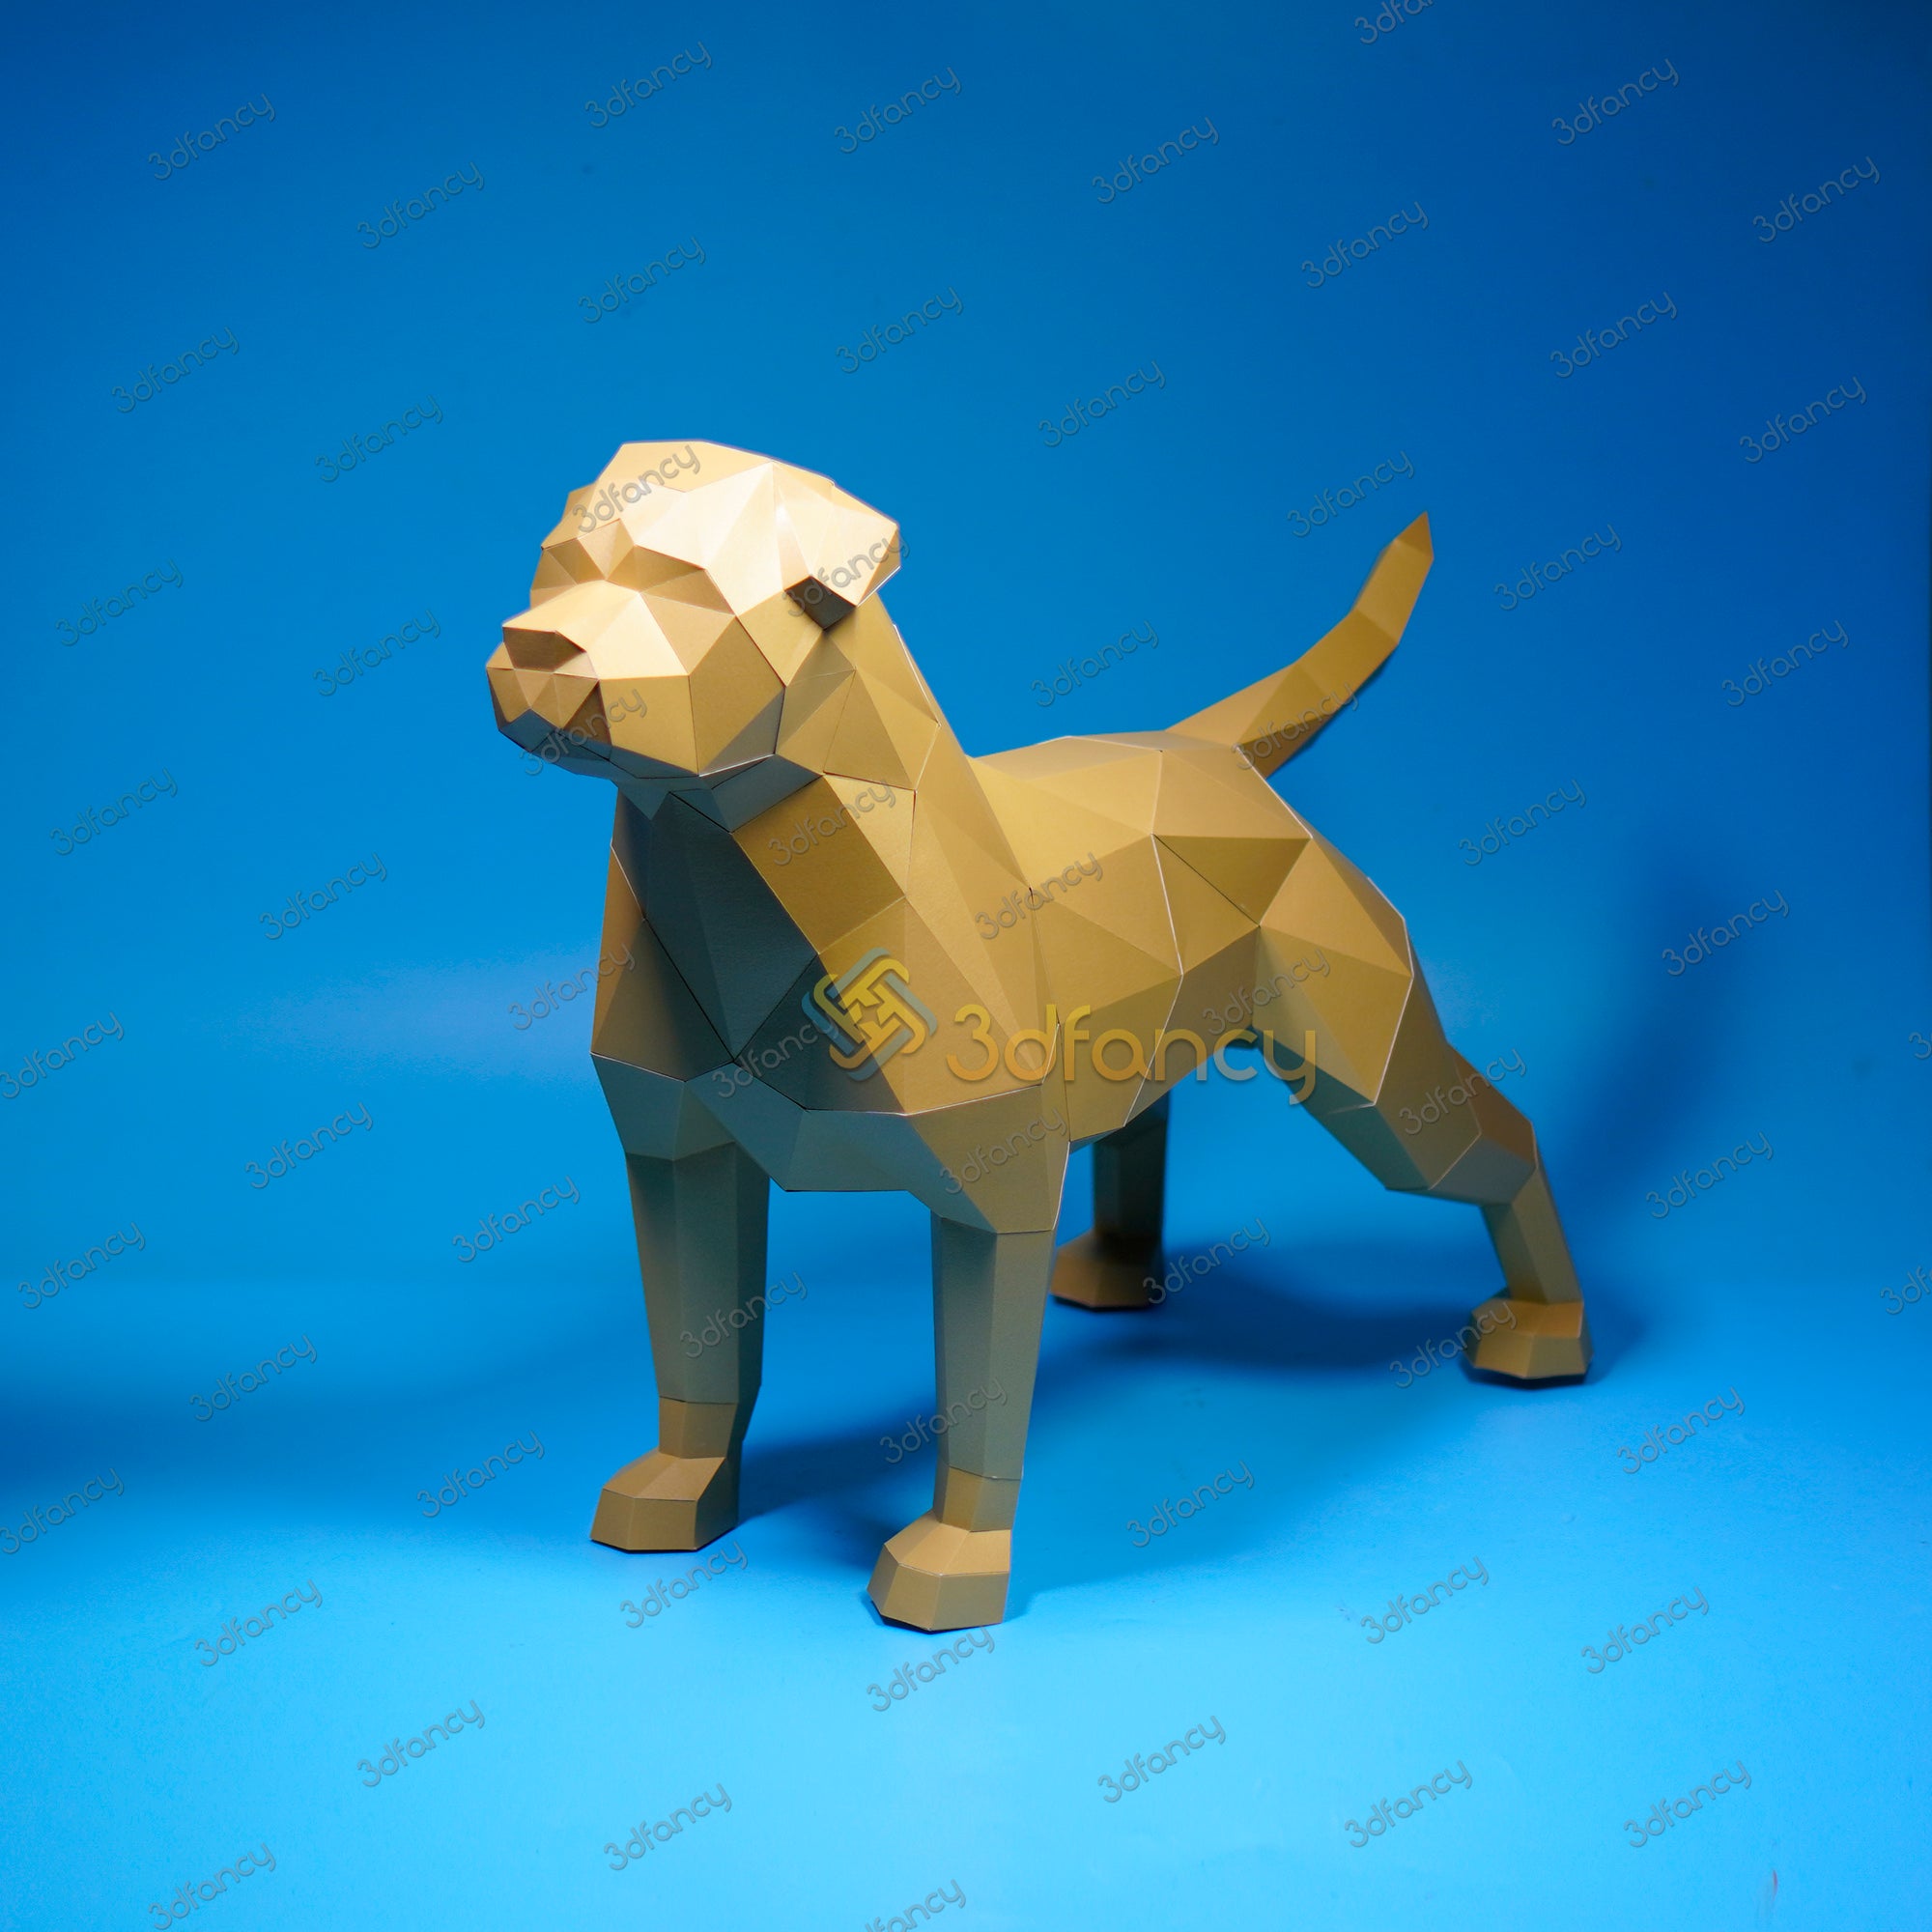 3D Papercraft Rottweiler Dog PDF, SVG, Studio 3 Template